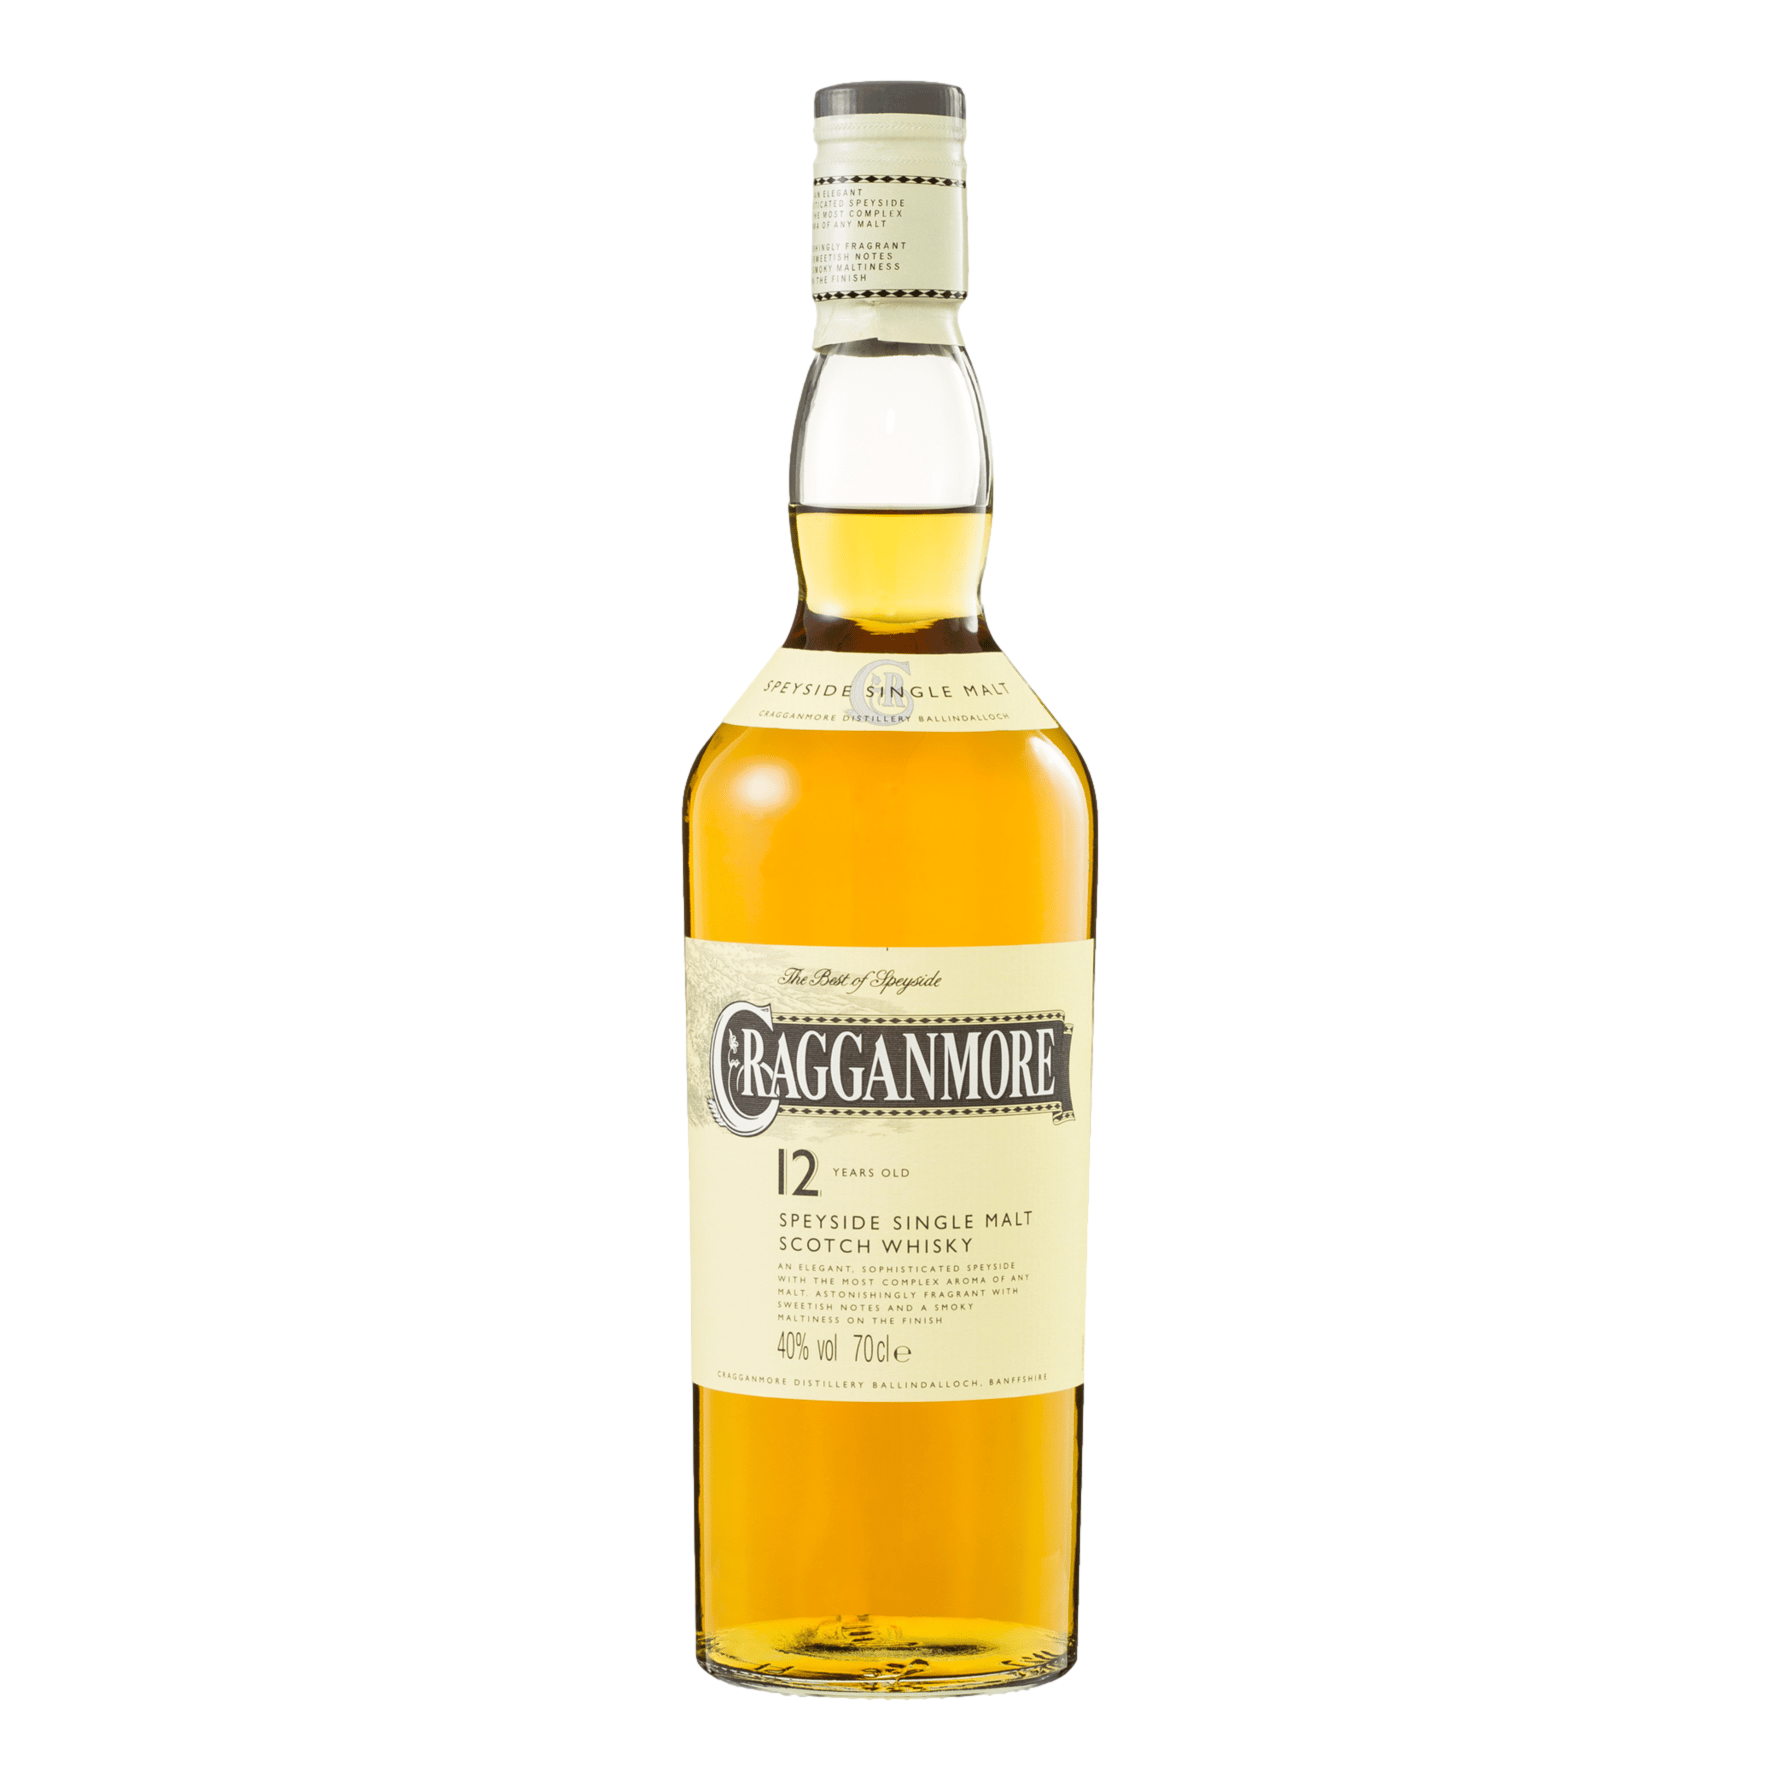 Cragganmore Speyside Single Malt Scotch Whisky 12YO 700ml